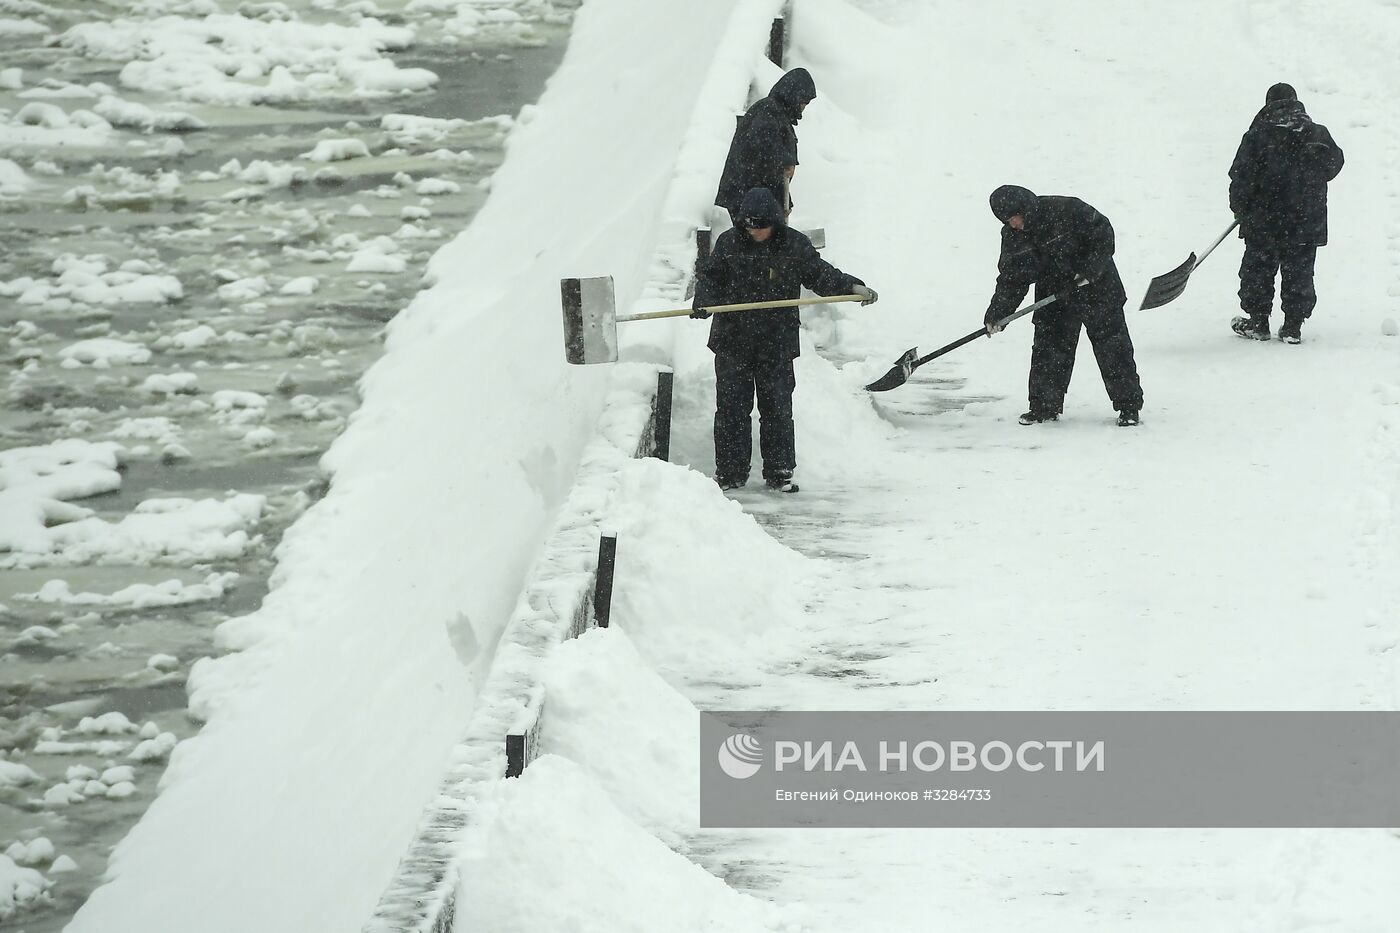 Уборка снега в Москве